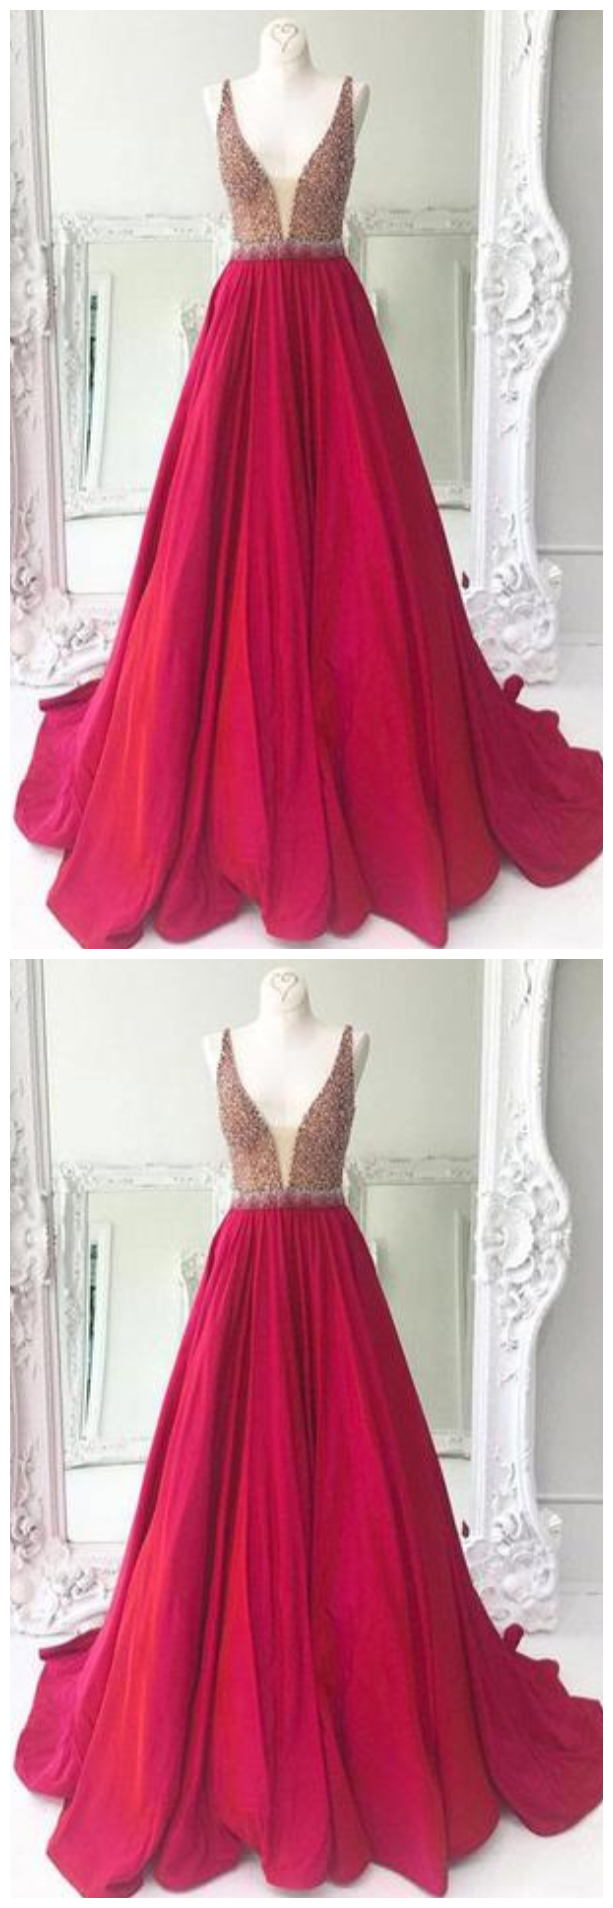 Sparkly Deep V Neck Fuchsia Long Prom Dress With Beading, A Line Sleeveless Party Dress